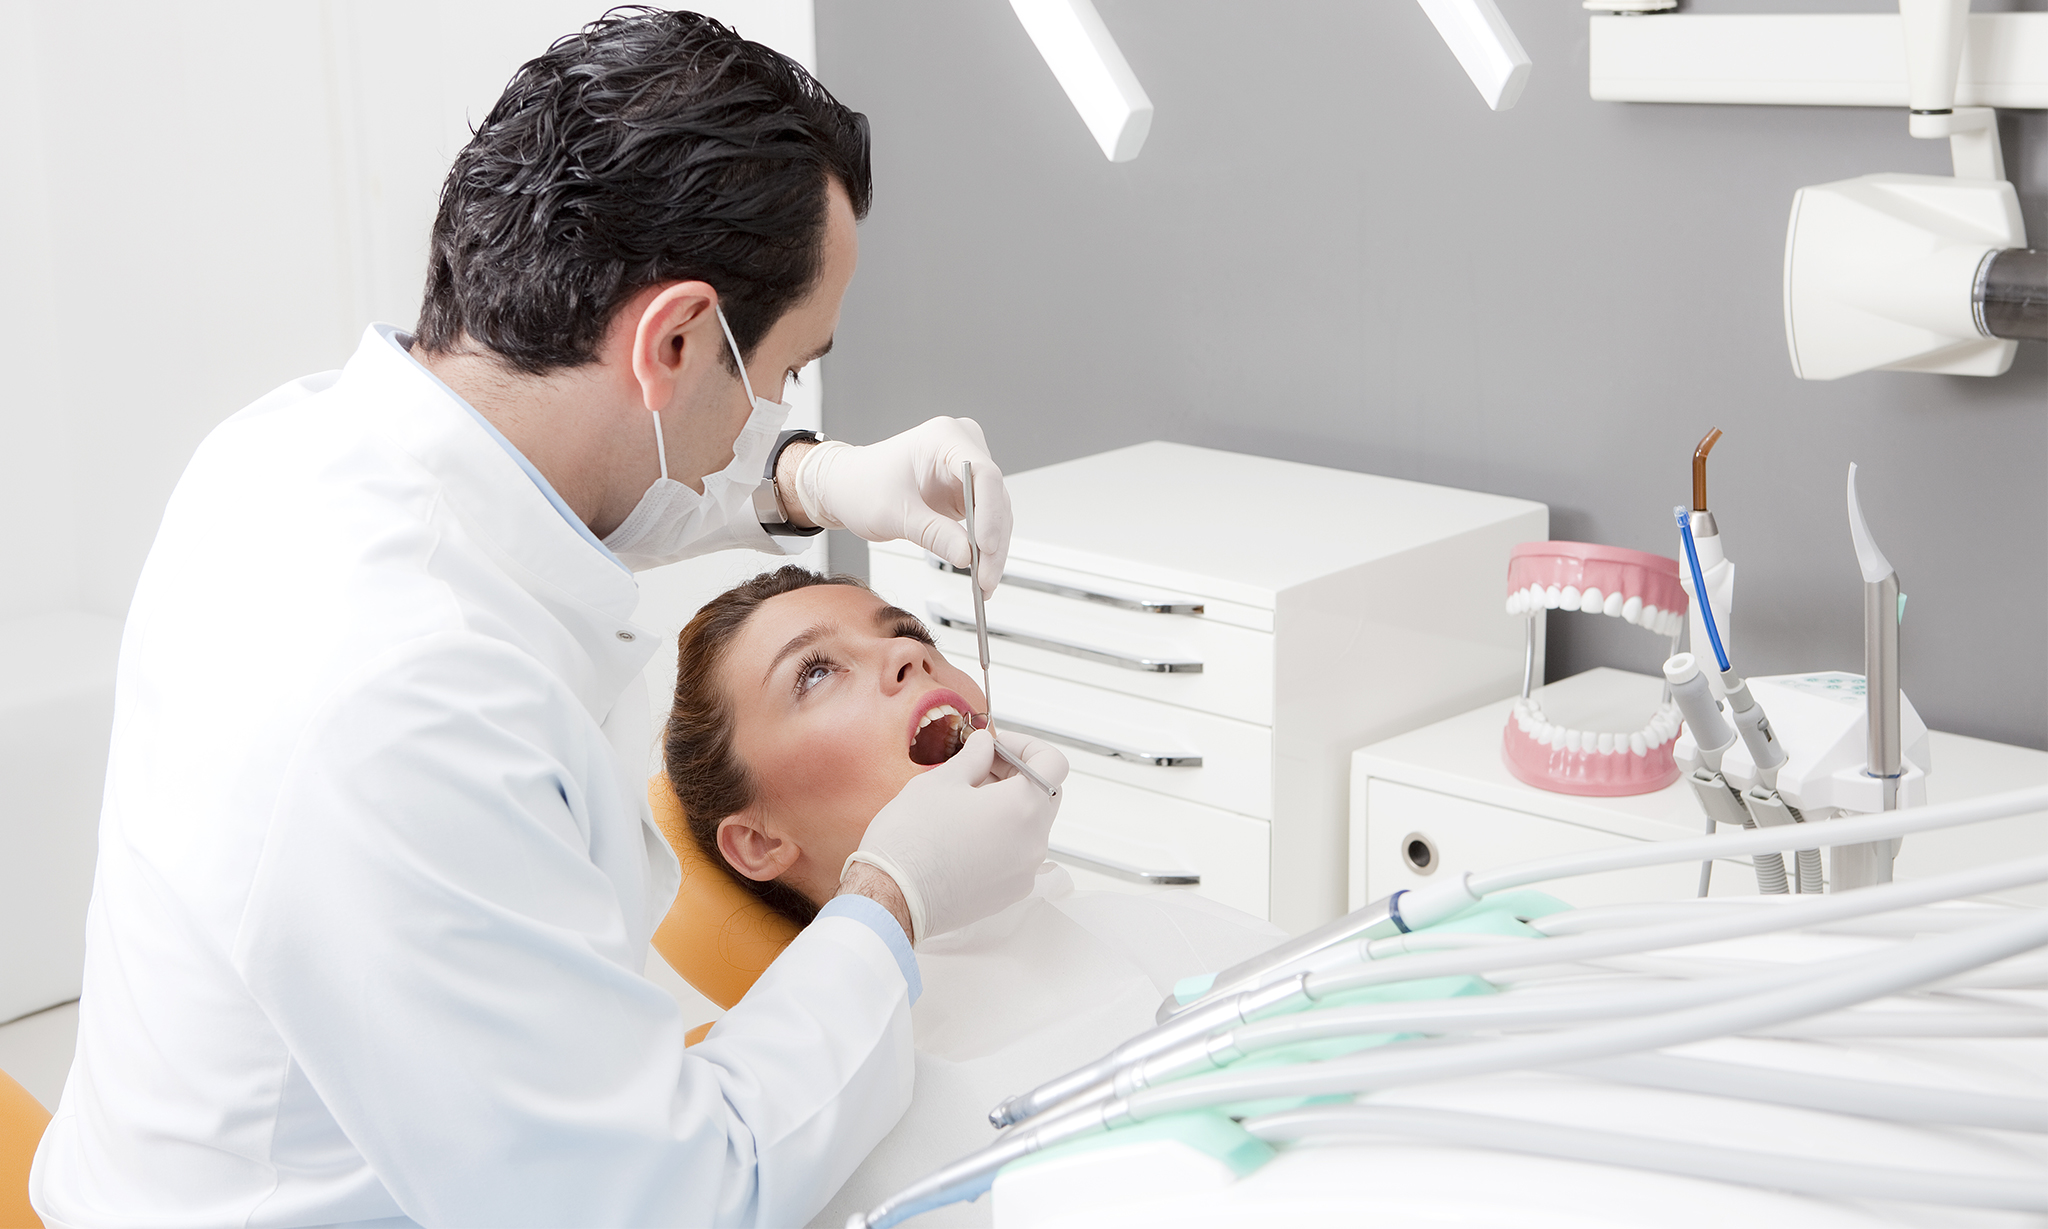 Know More about a Dental Clinic - ارتودنسى؛در كلينيك دندانپزشكى يا مطب ارتودنسى